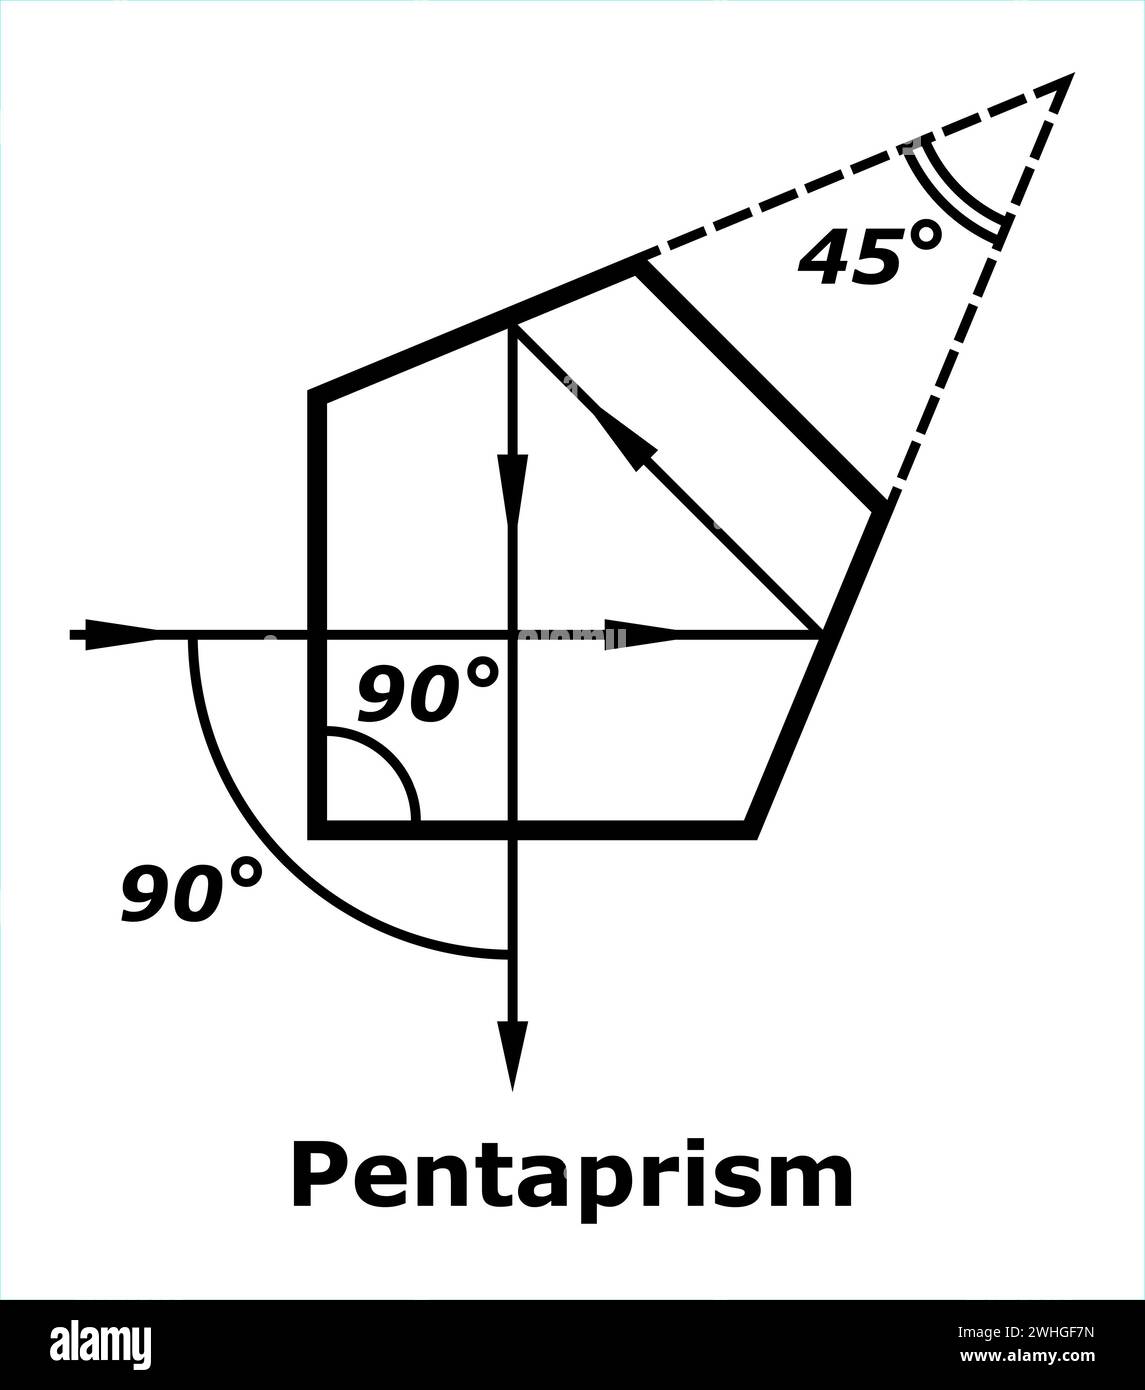 Pentaprism illustration isolated on white background Stock Photo